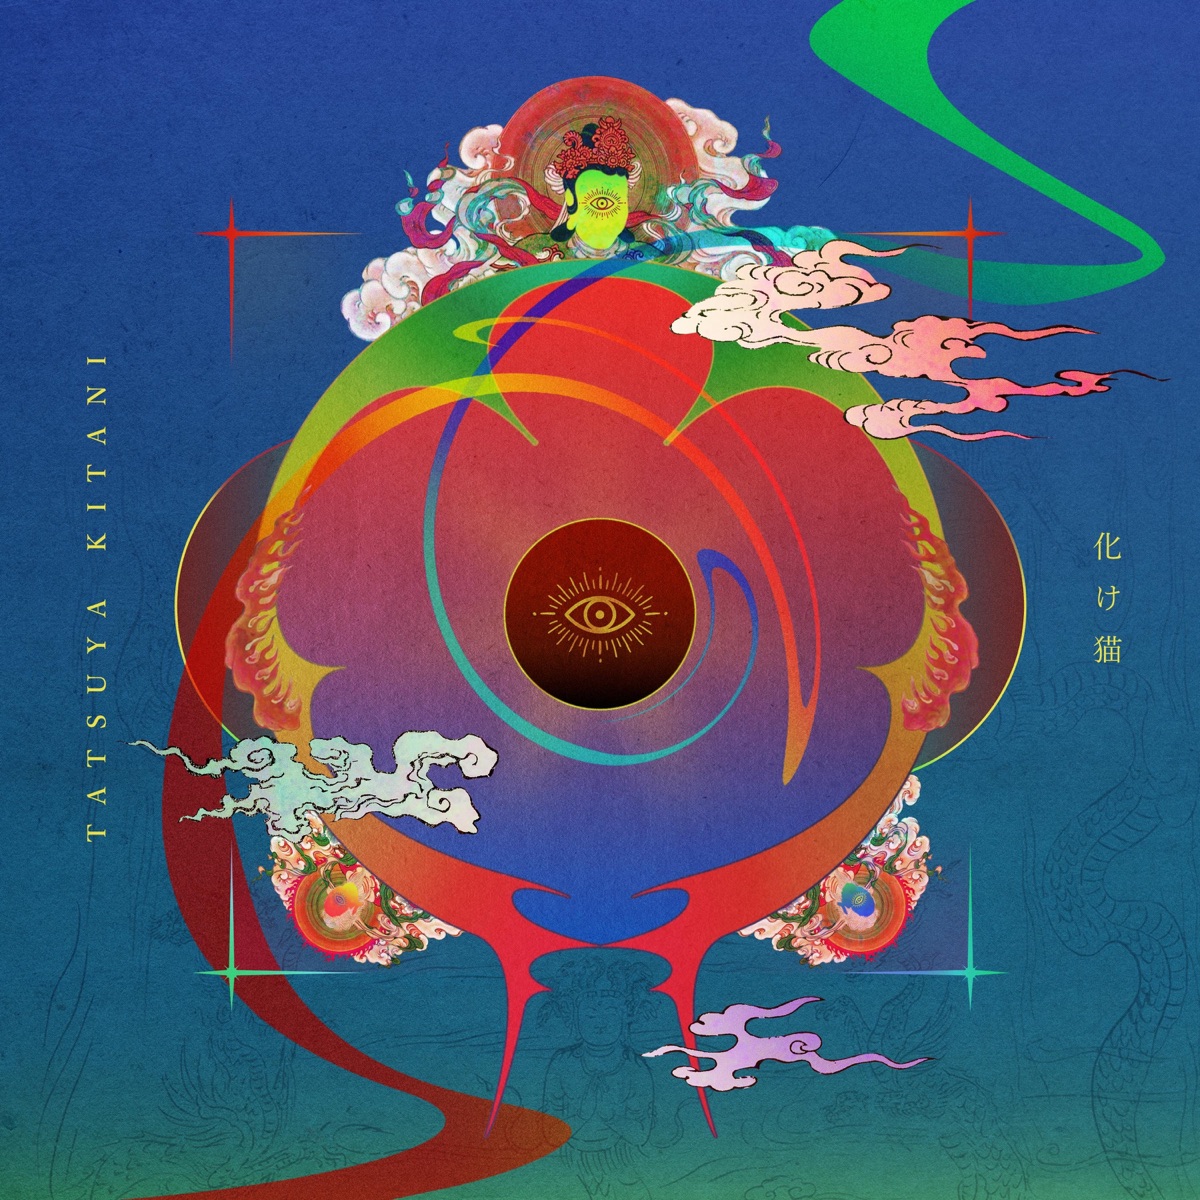 Cover art for『Tatsuya Kitani - Bakeneko』from the release『Bakeneko』